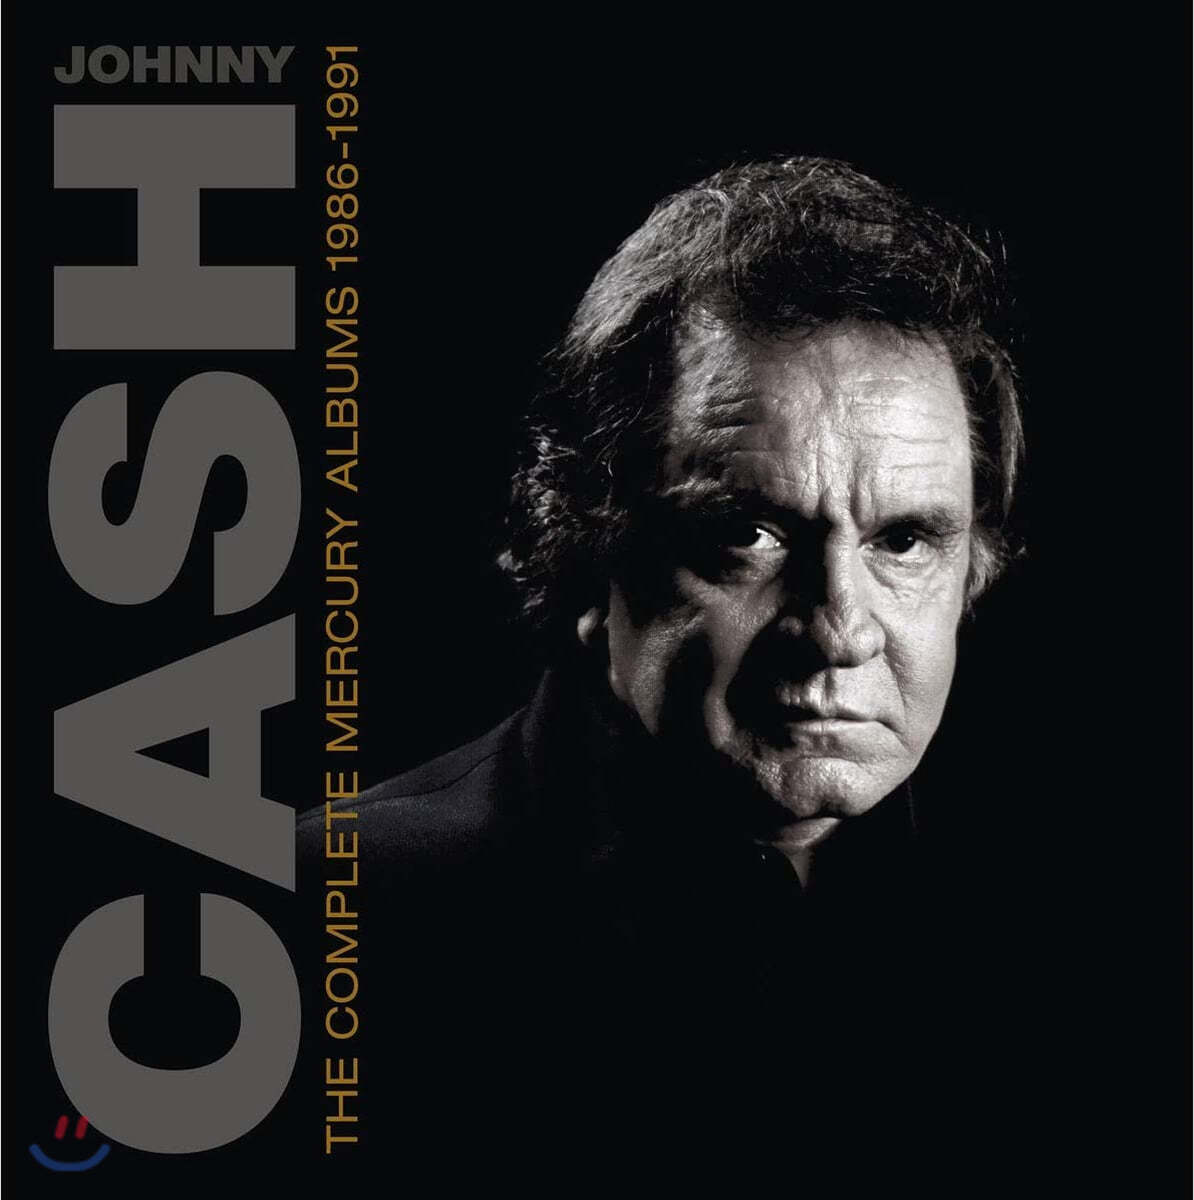 Johnny Cash (조니 캐쉬) - The Complete Mercury Albums 1986 - 1991 